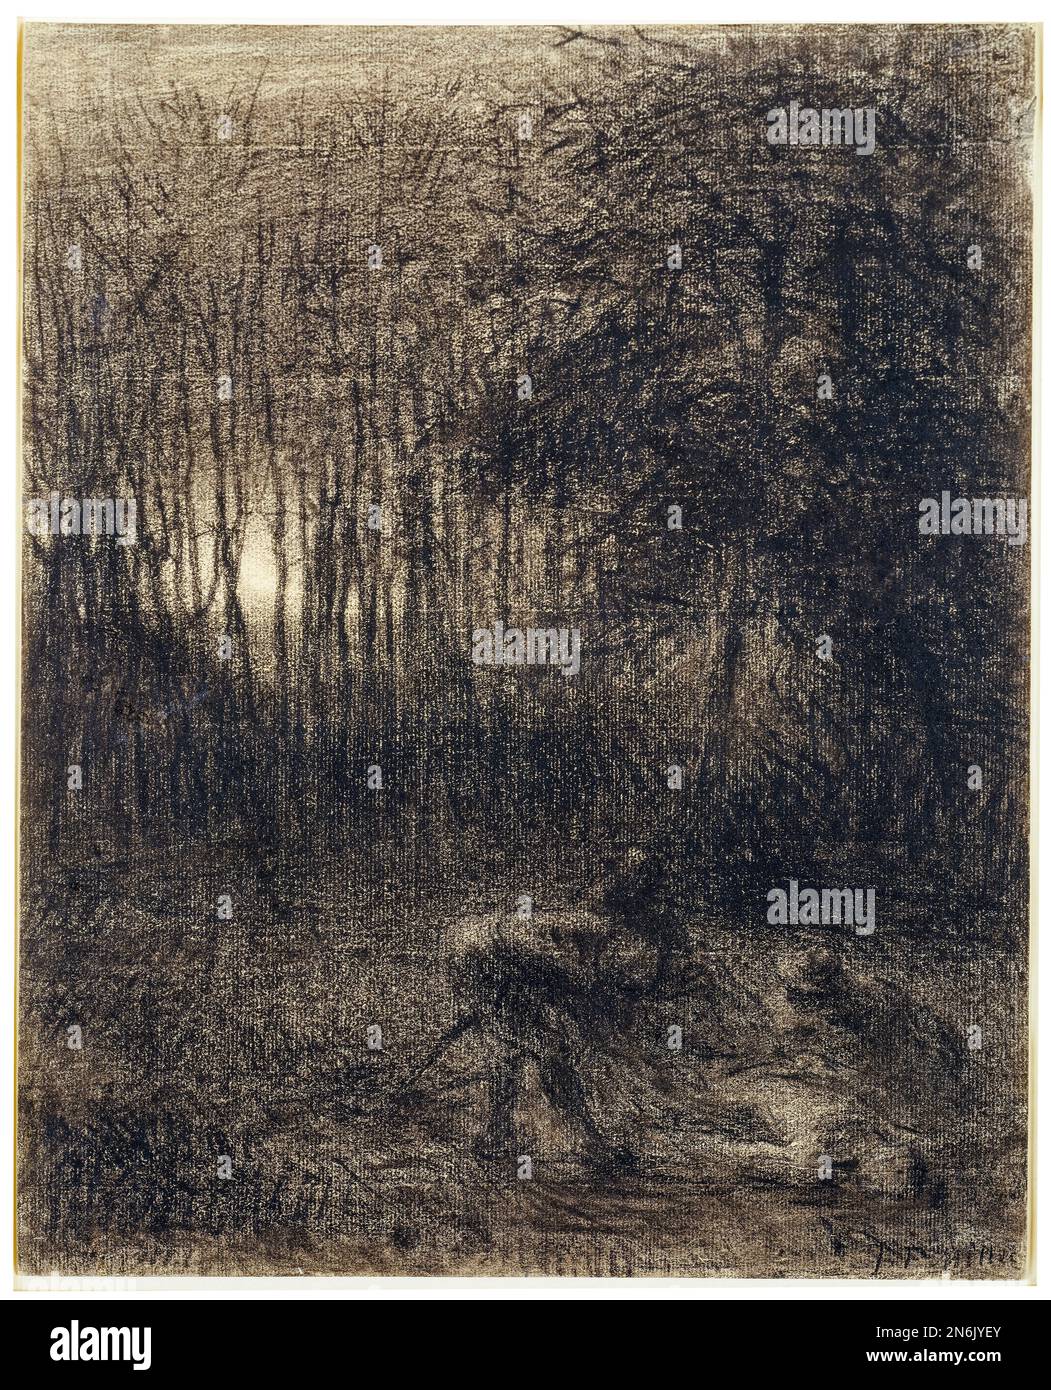 Jean Francois Millet, nächtliche Szene in einem Wald (Nachtszene in den Wäldern), gemalt in Kreide, ca. 1855 Stockfoto